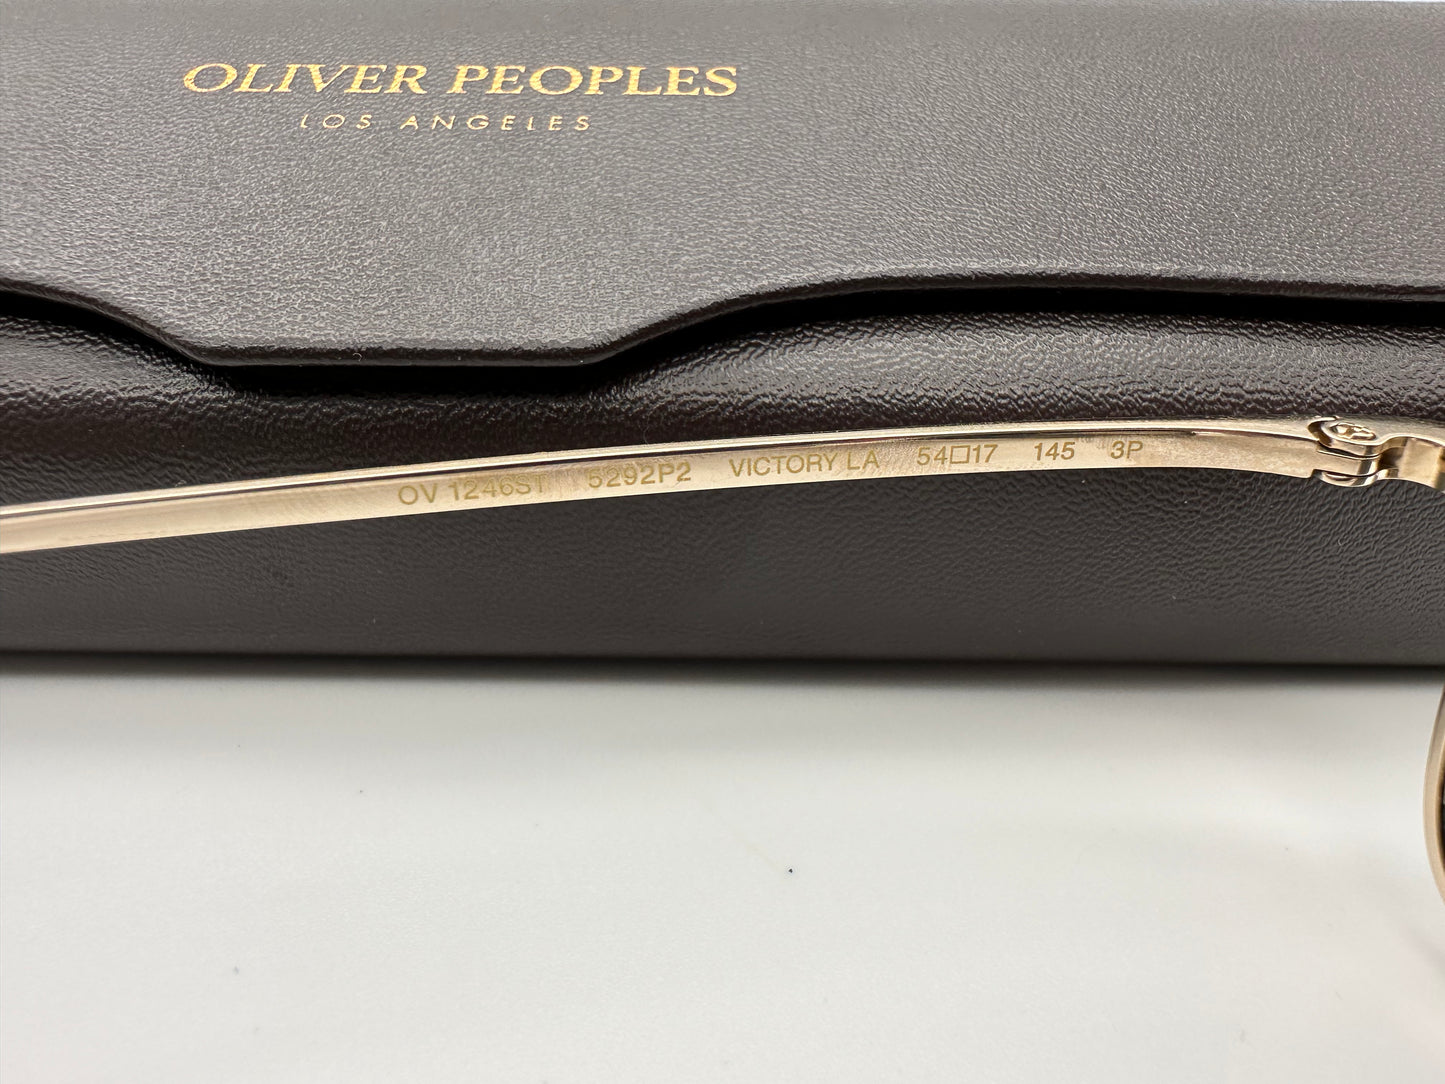 Preowned Oliver Peoples VICTORY LA 54mm Titanium OV1246ST 5292P2 GOLD Glass Polarized Sunglasses